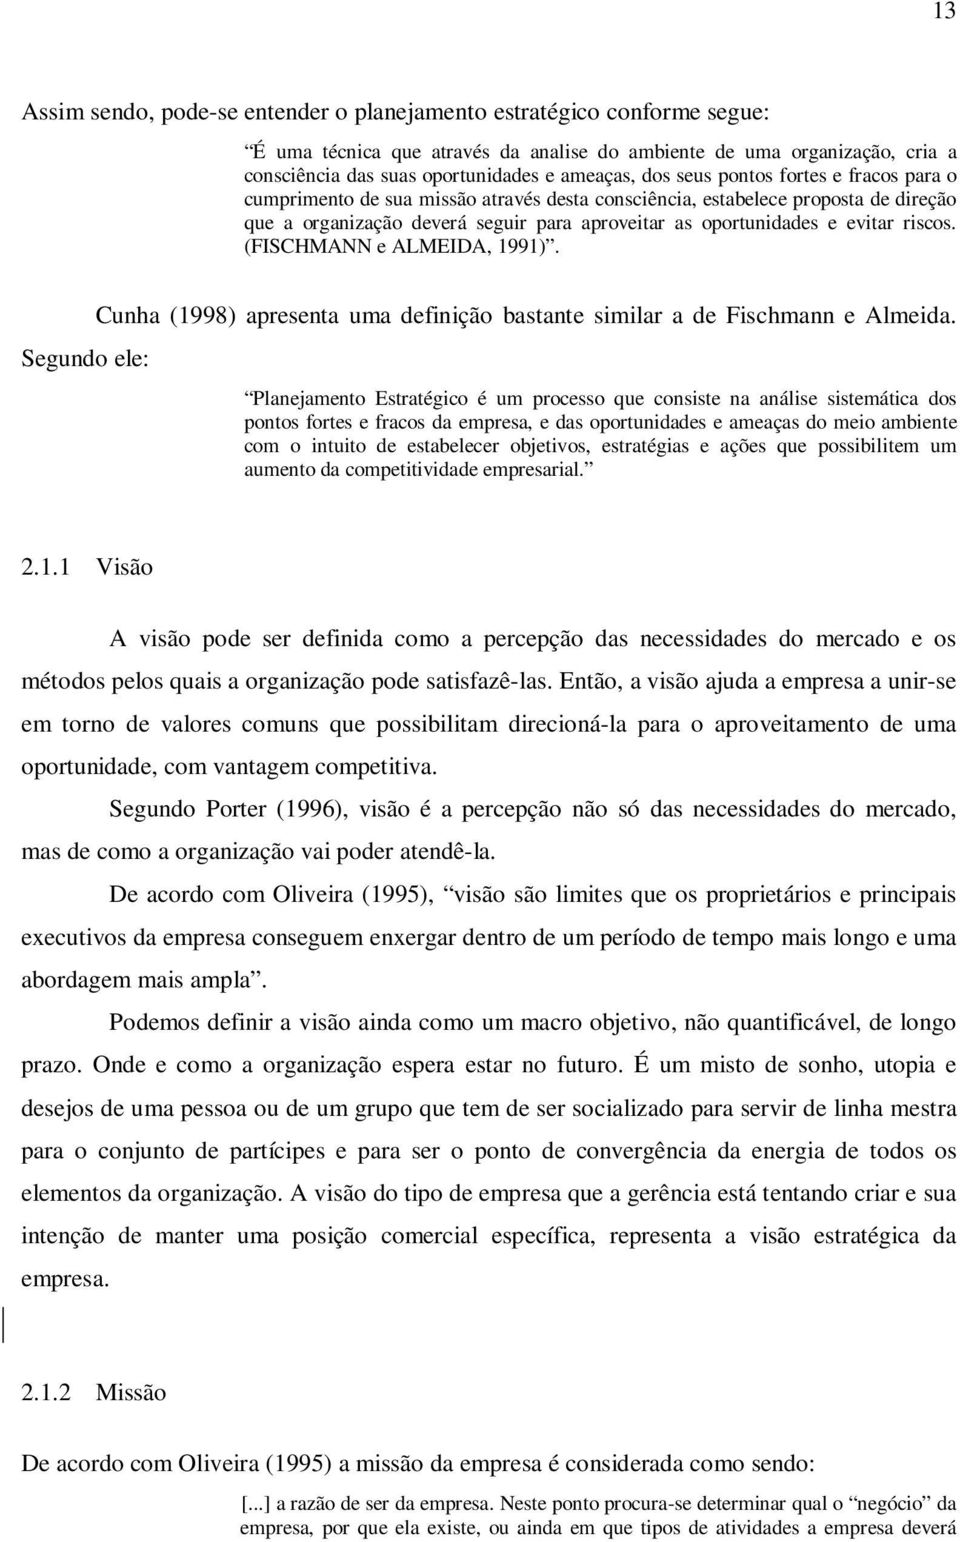 riscos. (FISCHMANN e ALMEIDA, 1991). Segundo ele: Cunha (1998) apresenta uma definição bastante similar a de Fischmann e Almeida.